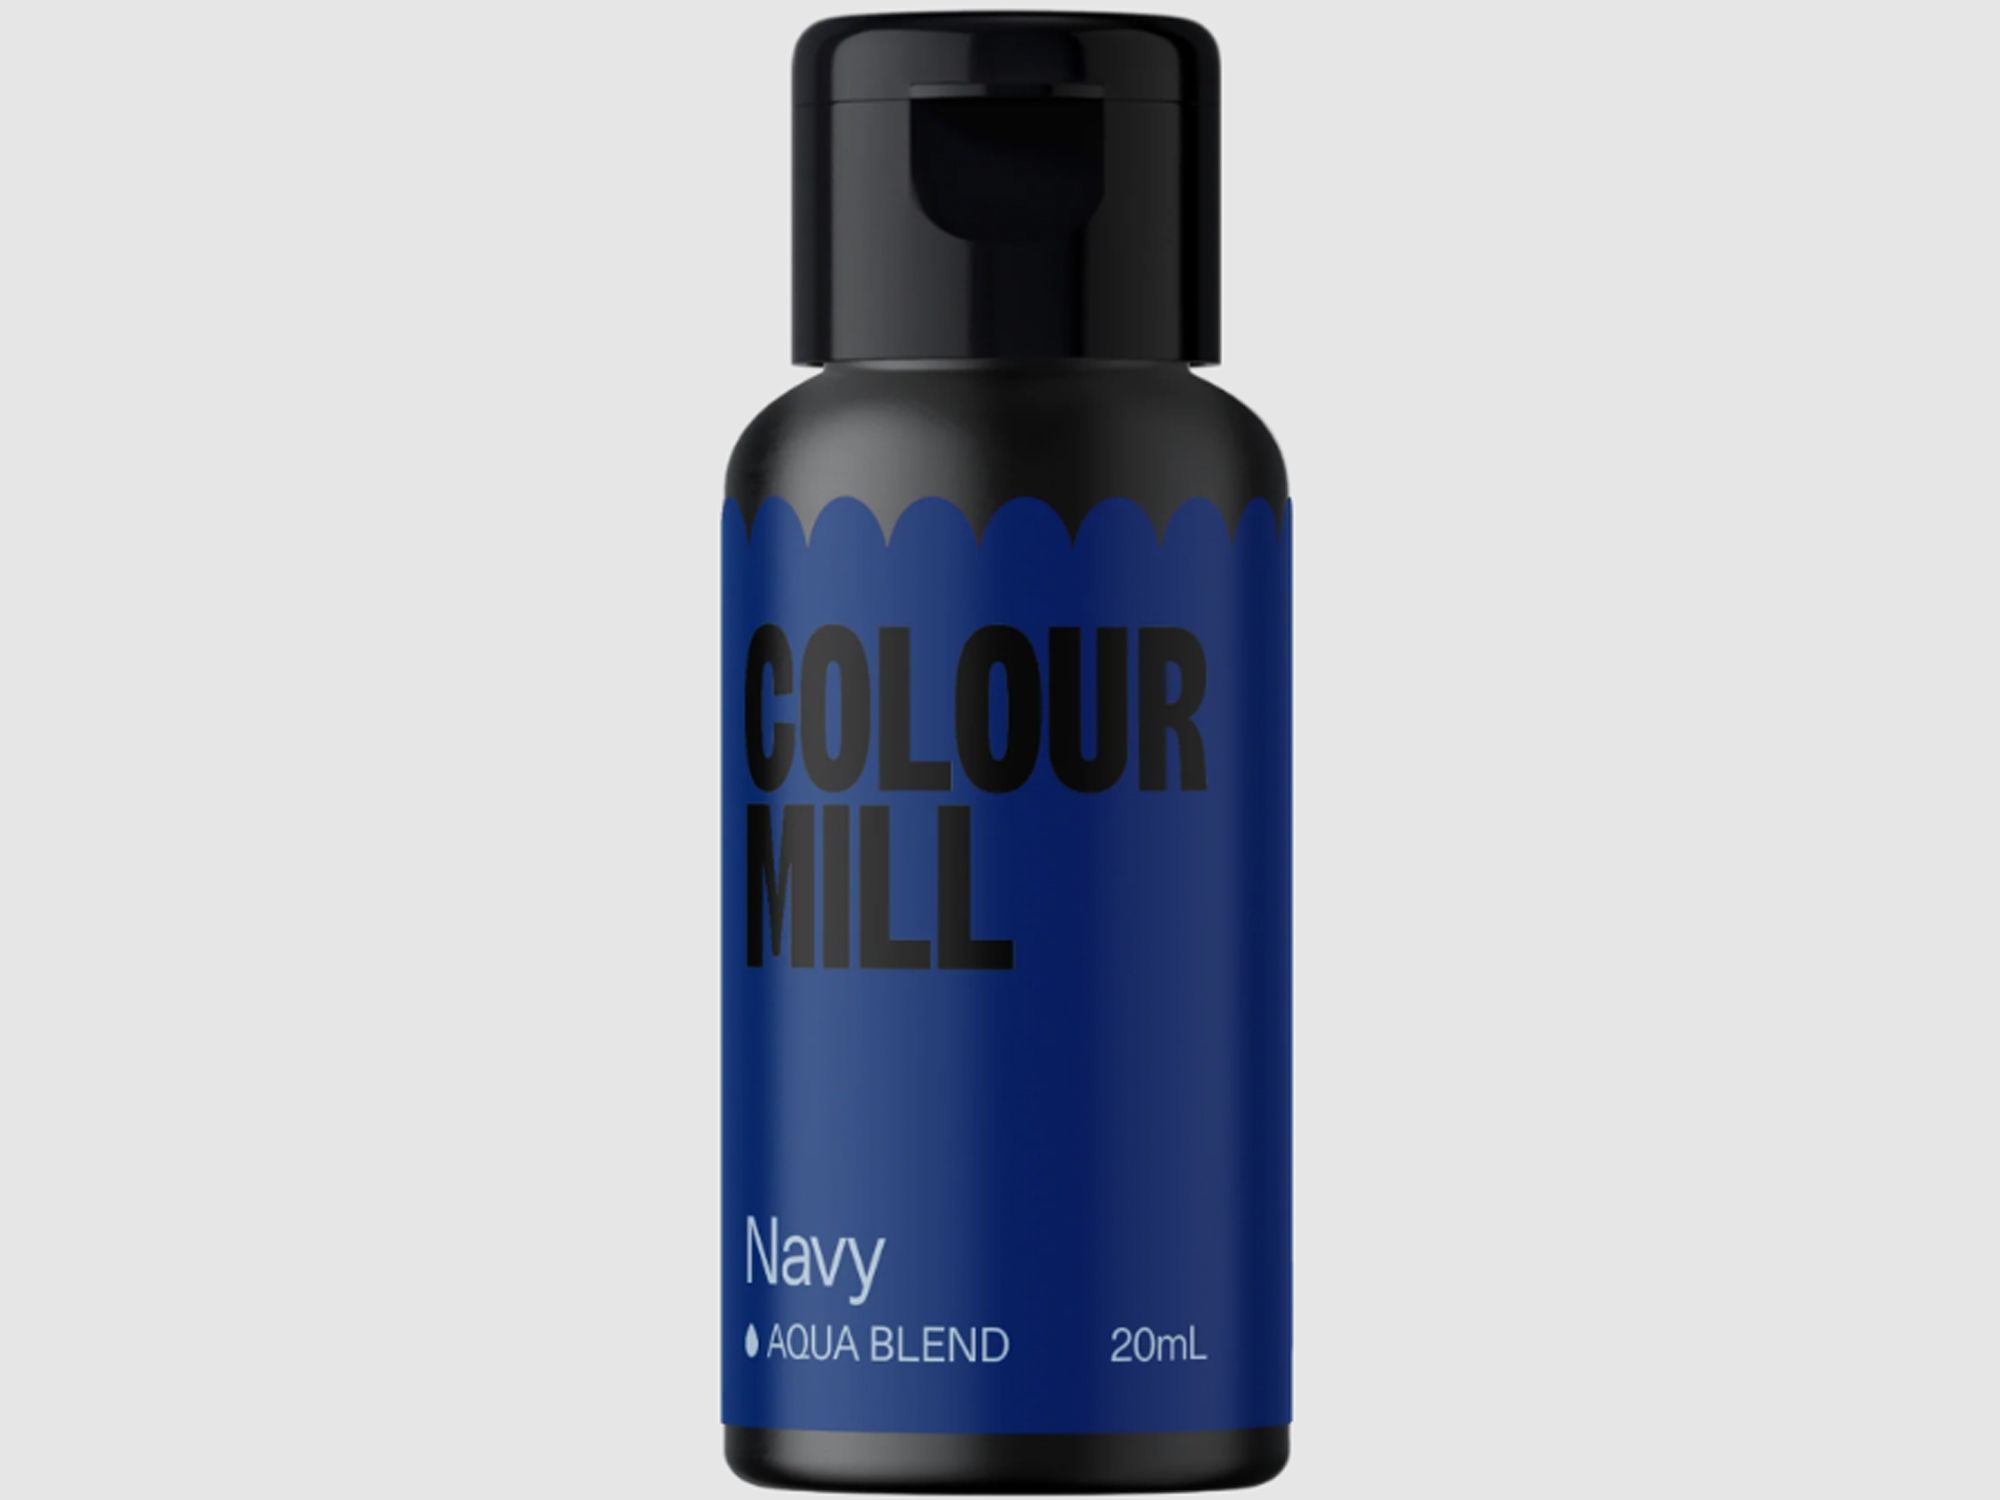 Colour Mill Navy (Aqua Blend) 20ml